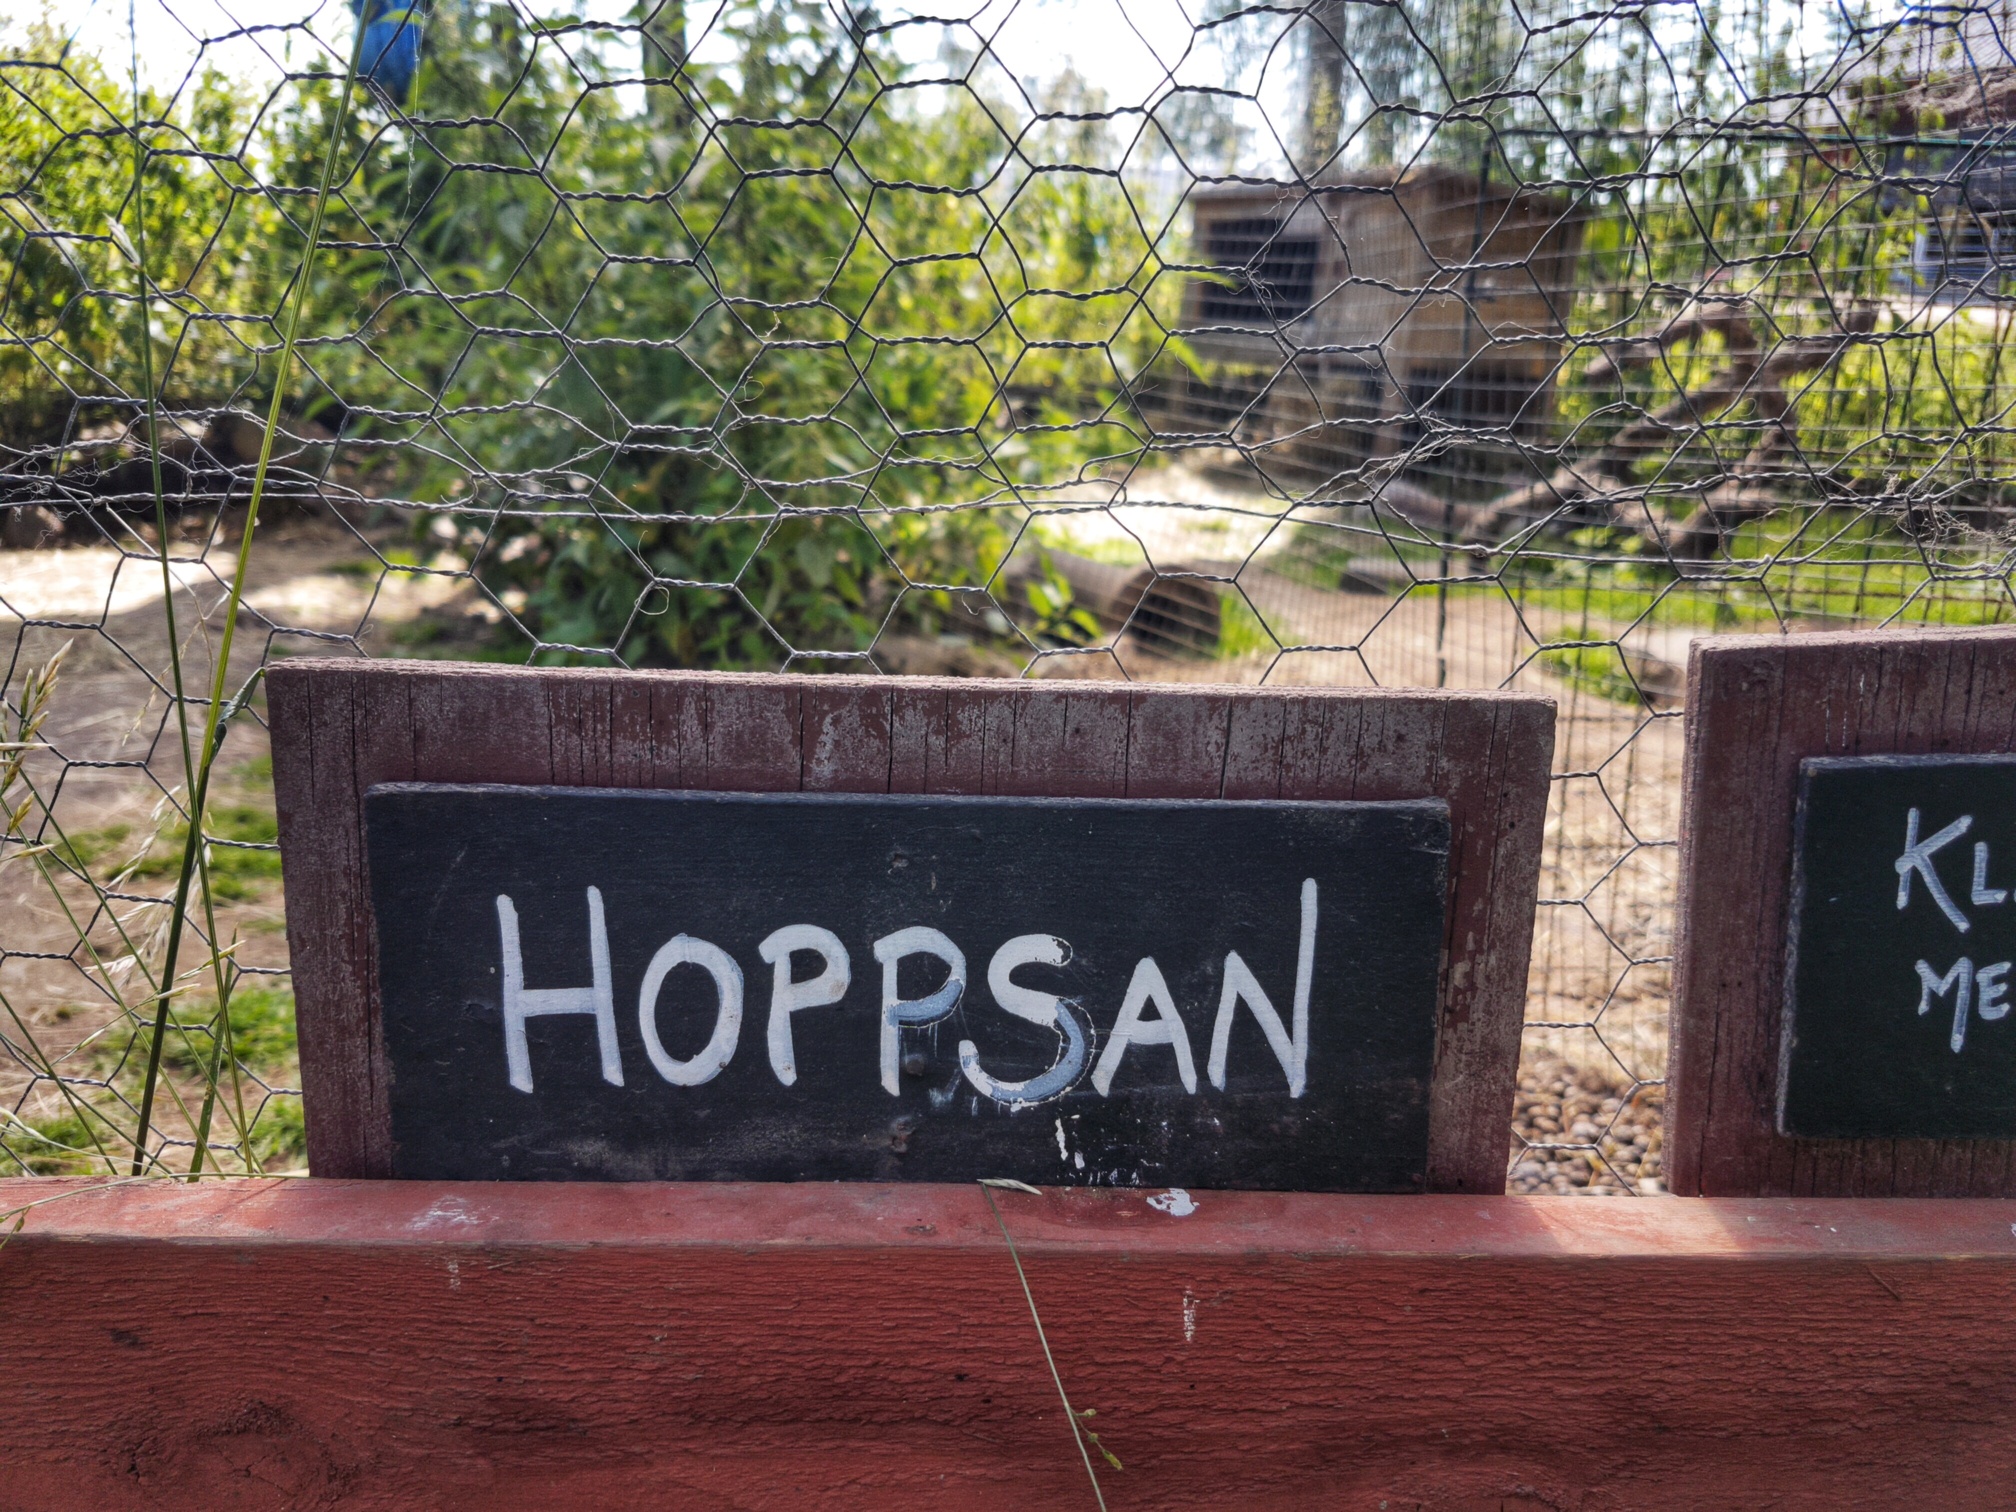 Hoppsan lives here